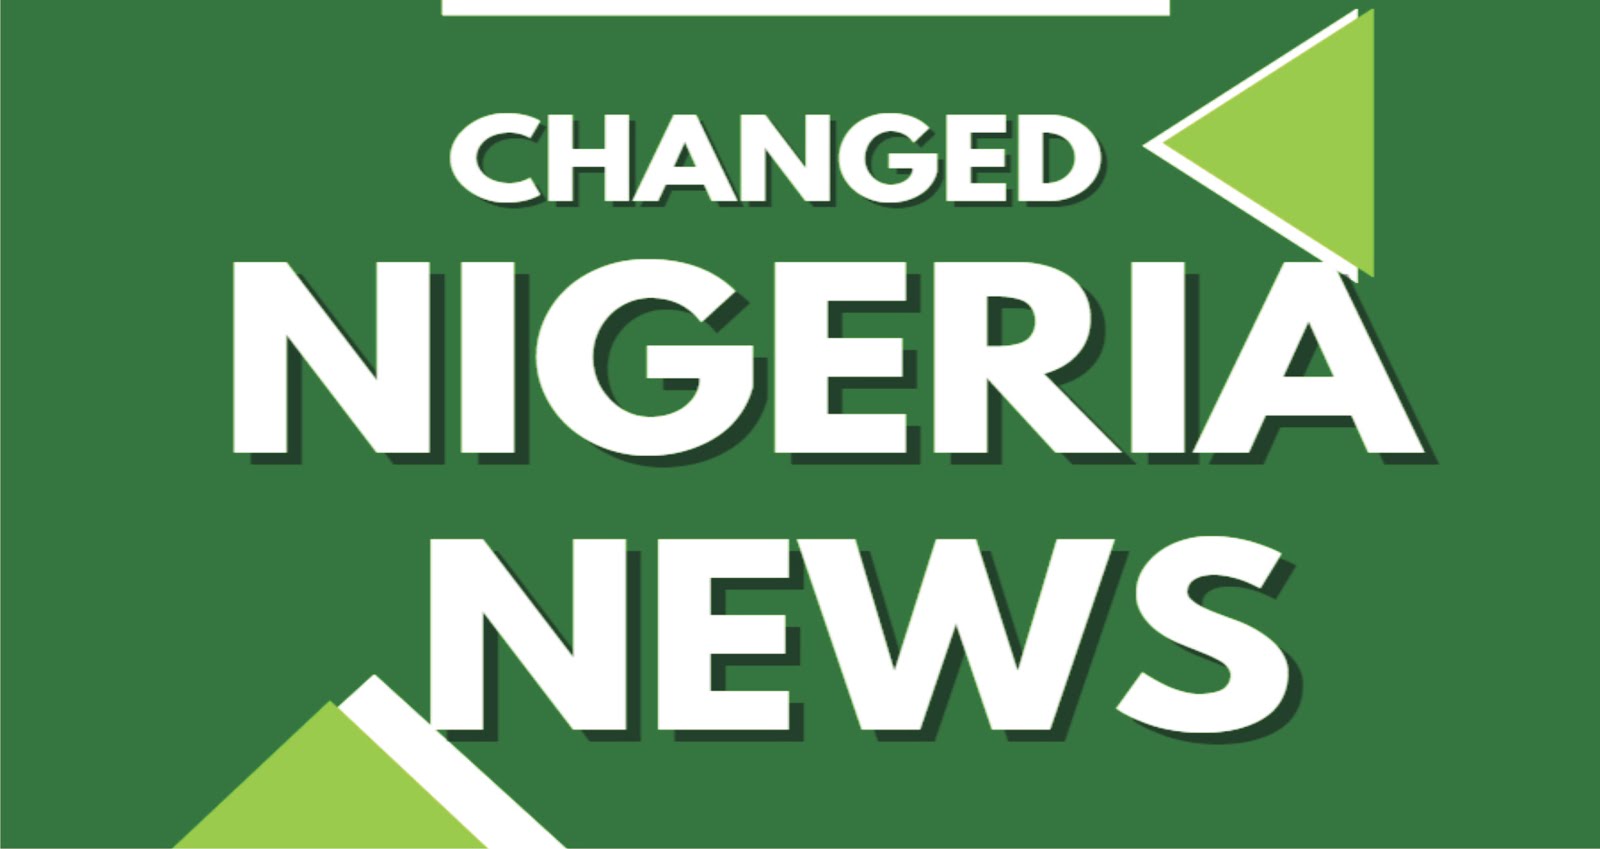 CHANGED NIGERIA NEWS